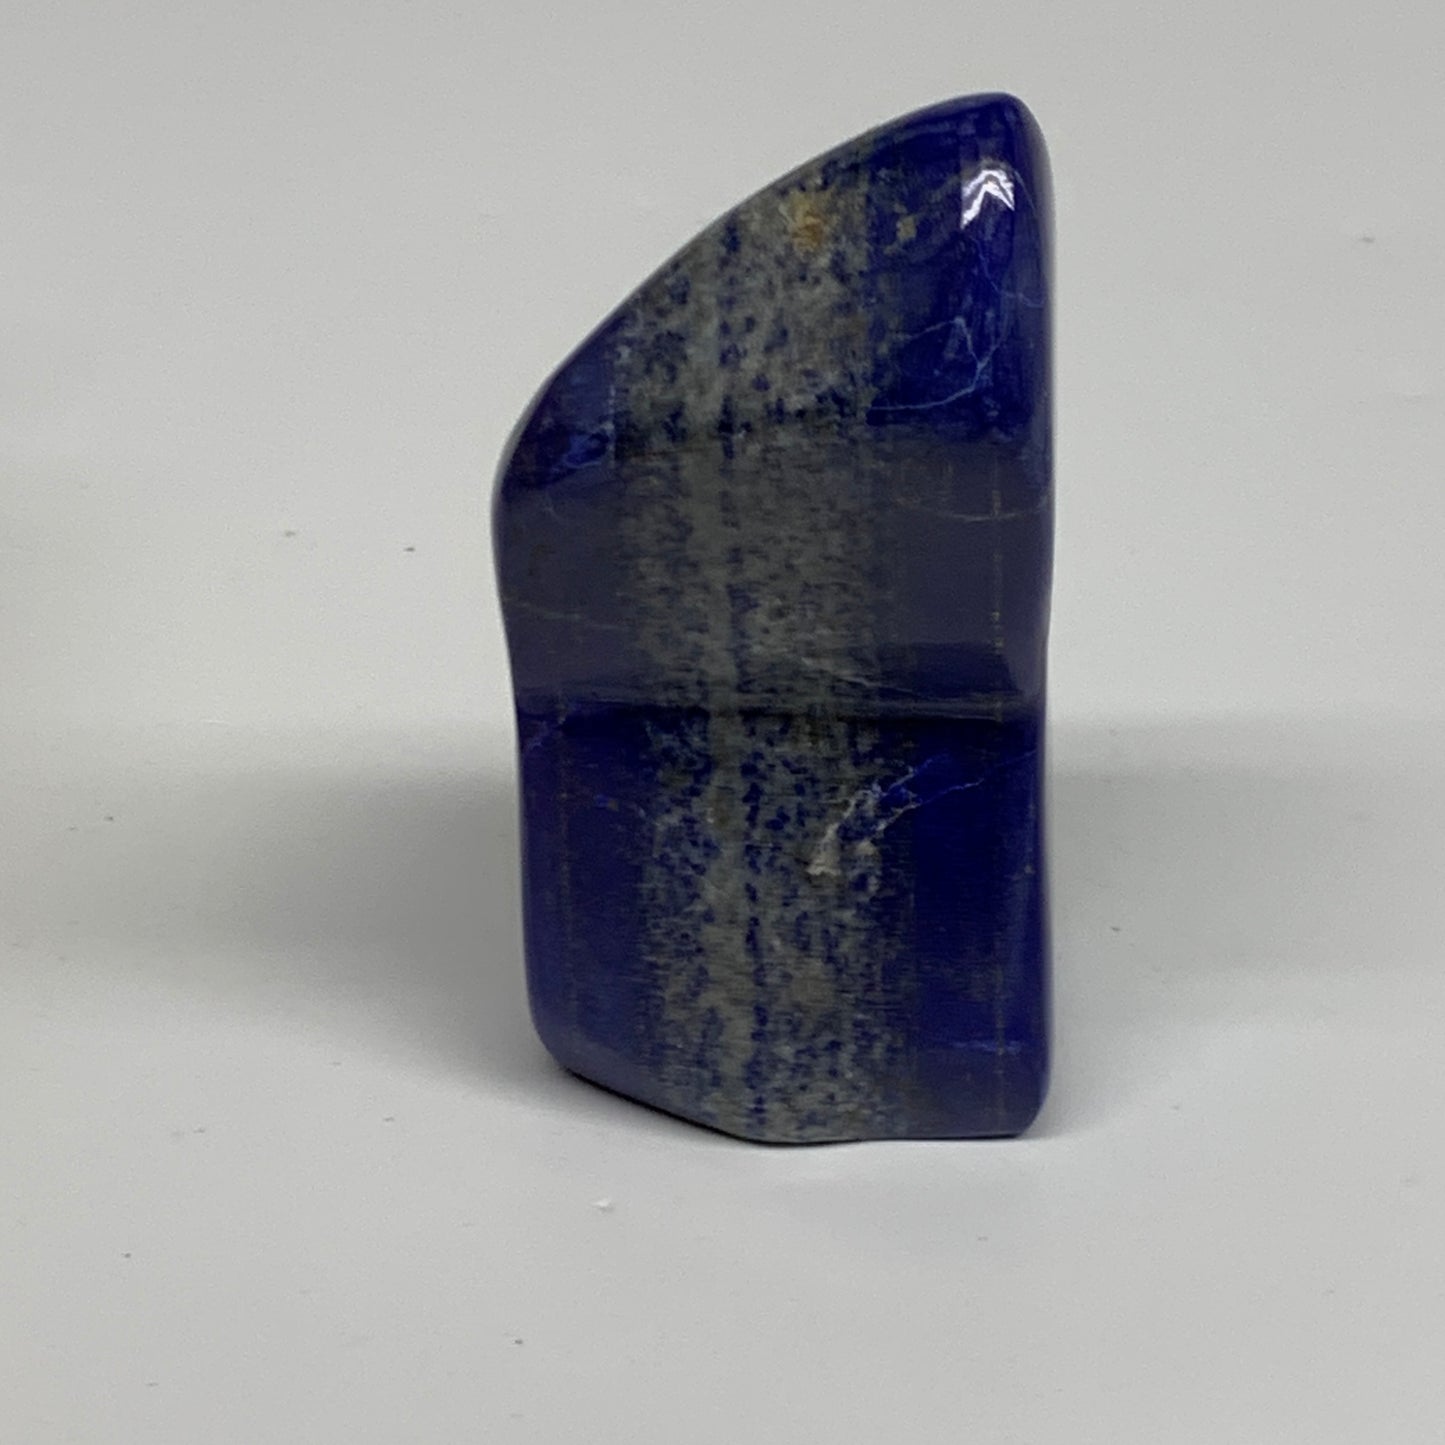 158.6g, 3"x1.4"x1" Natural Freeform Lapis Lazuli from Afghanistan, B32908